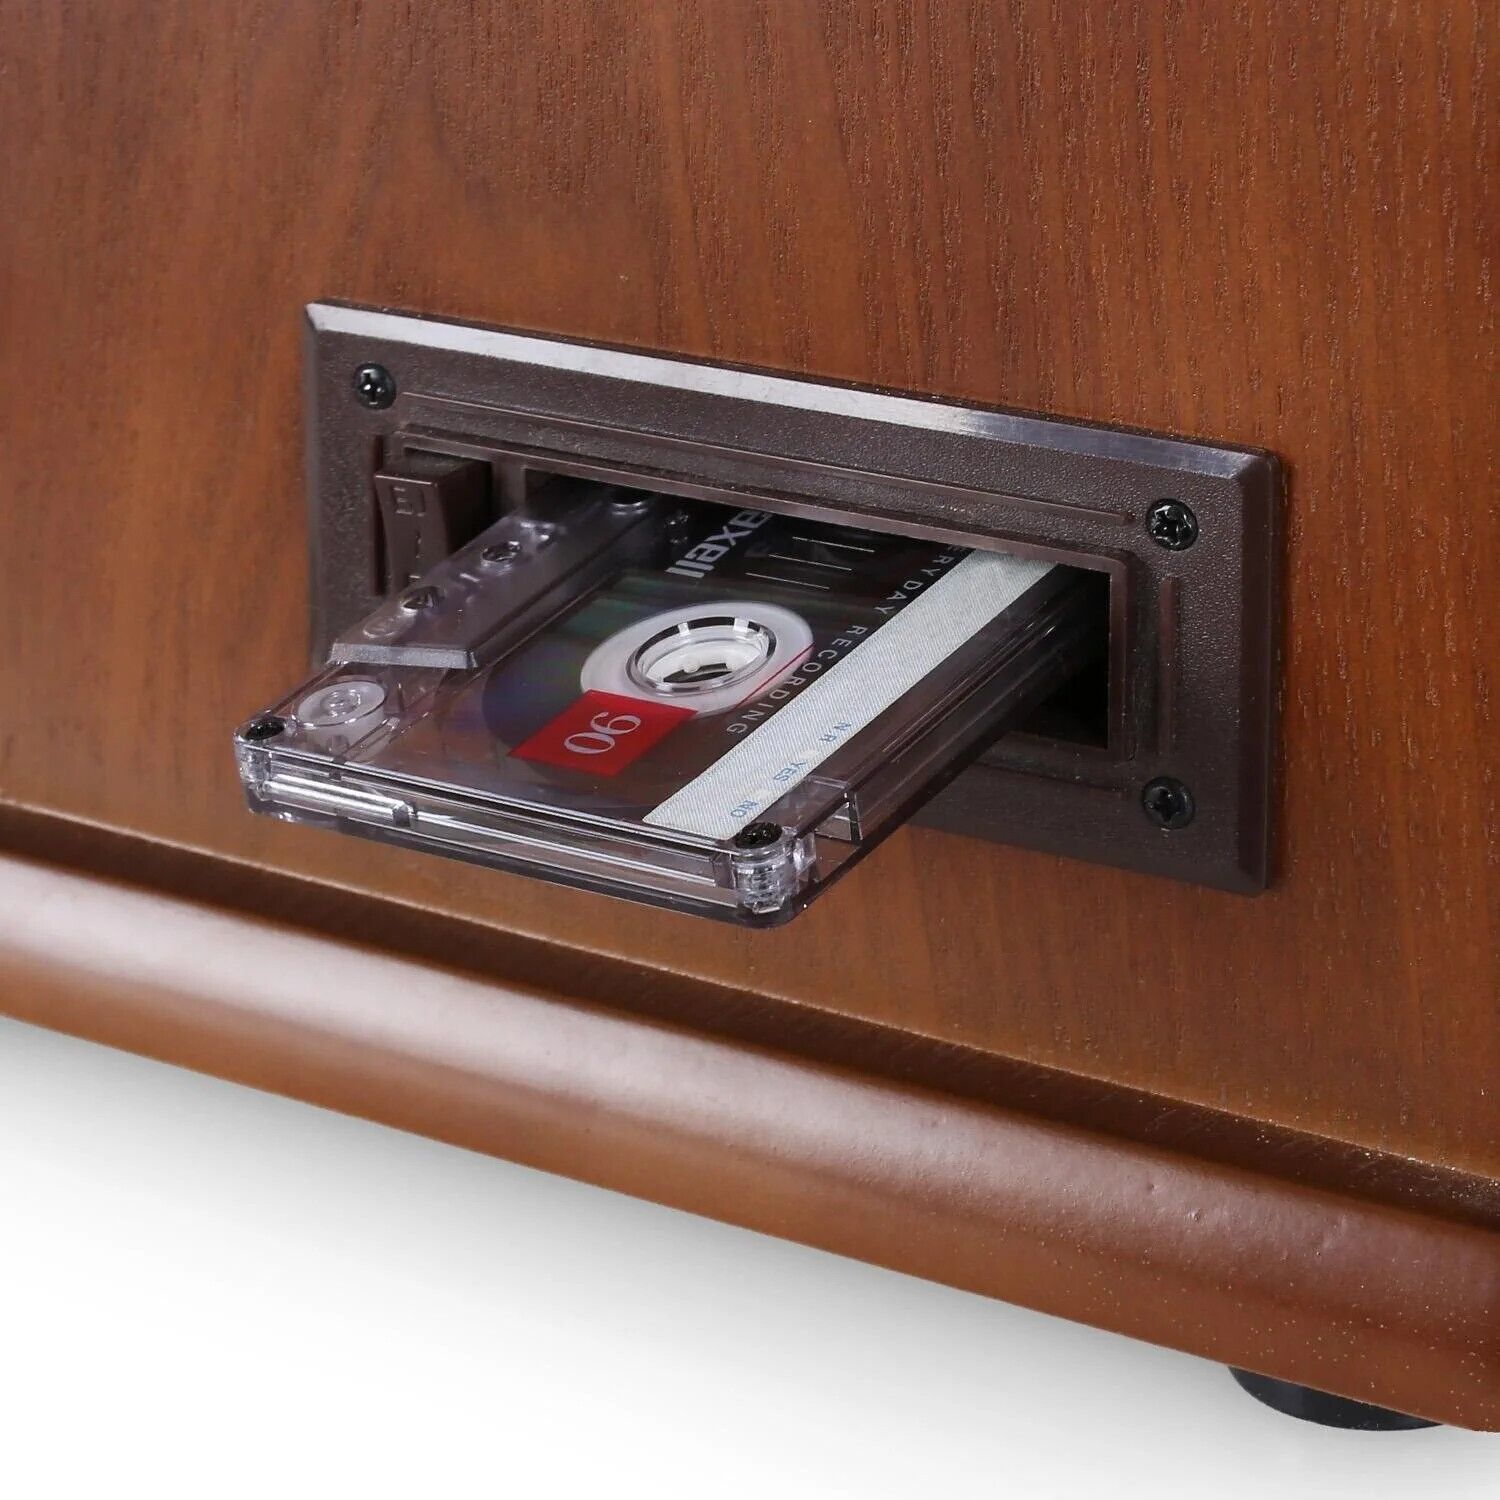 Plattenspieler Nostalgie Holz Musikanlage USB Plattenspieler Retro Stereoanlage